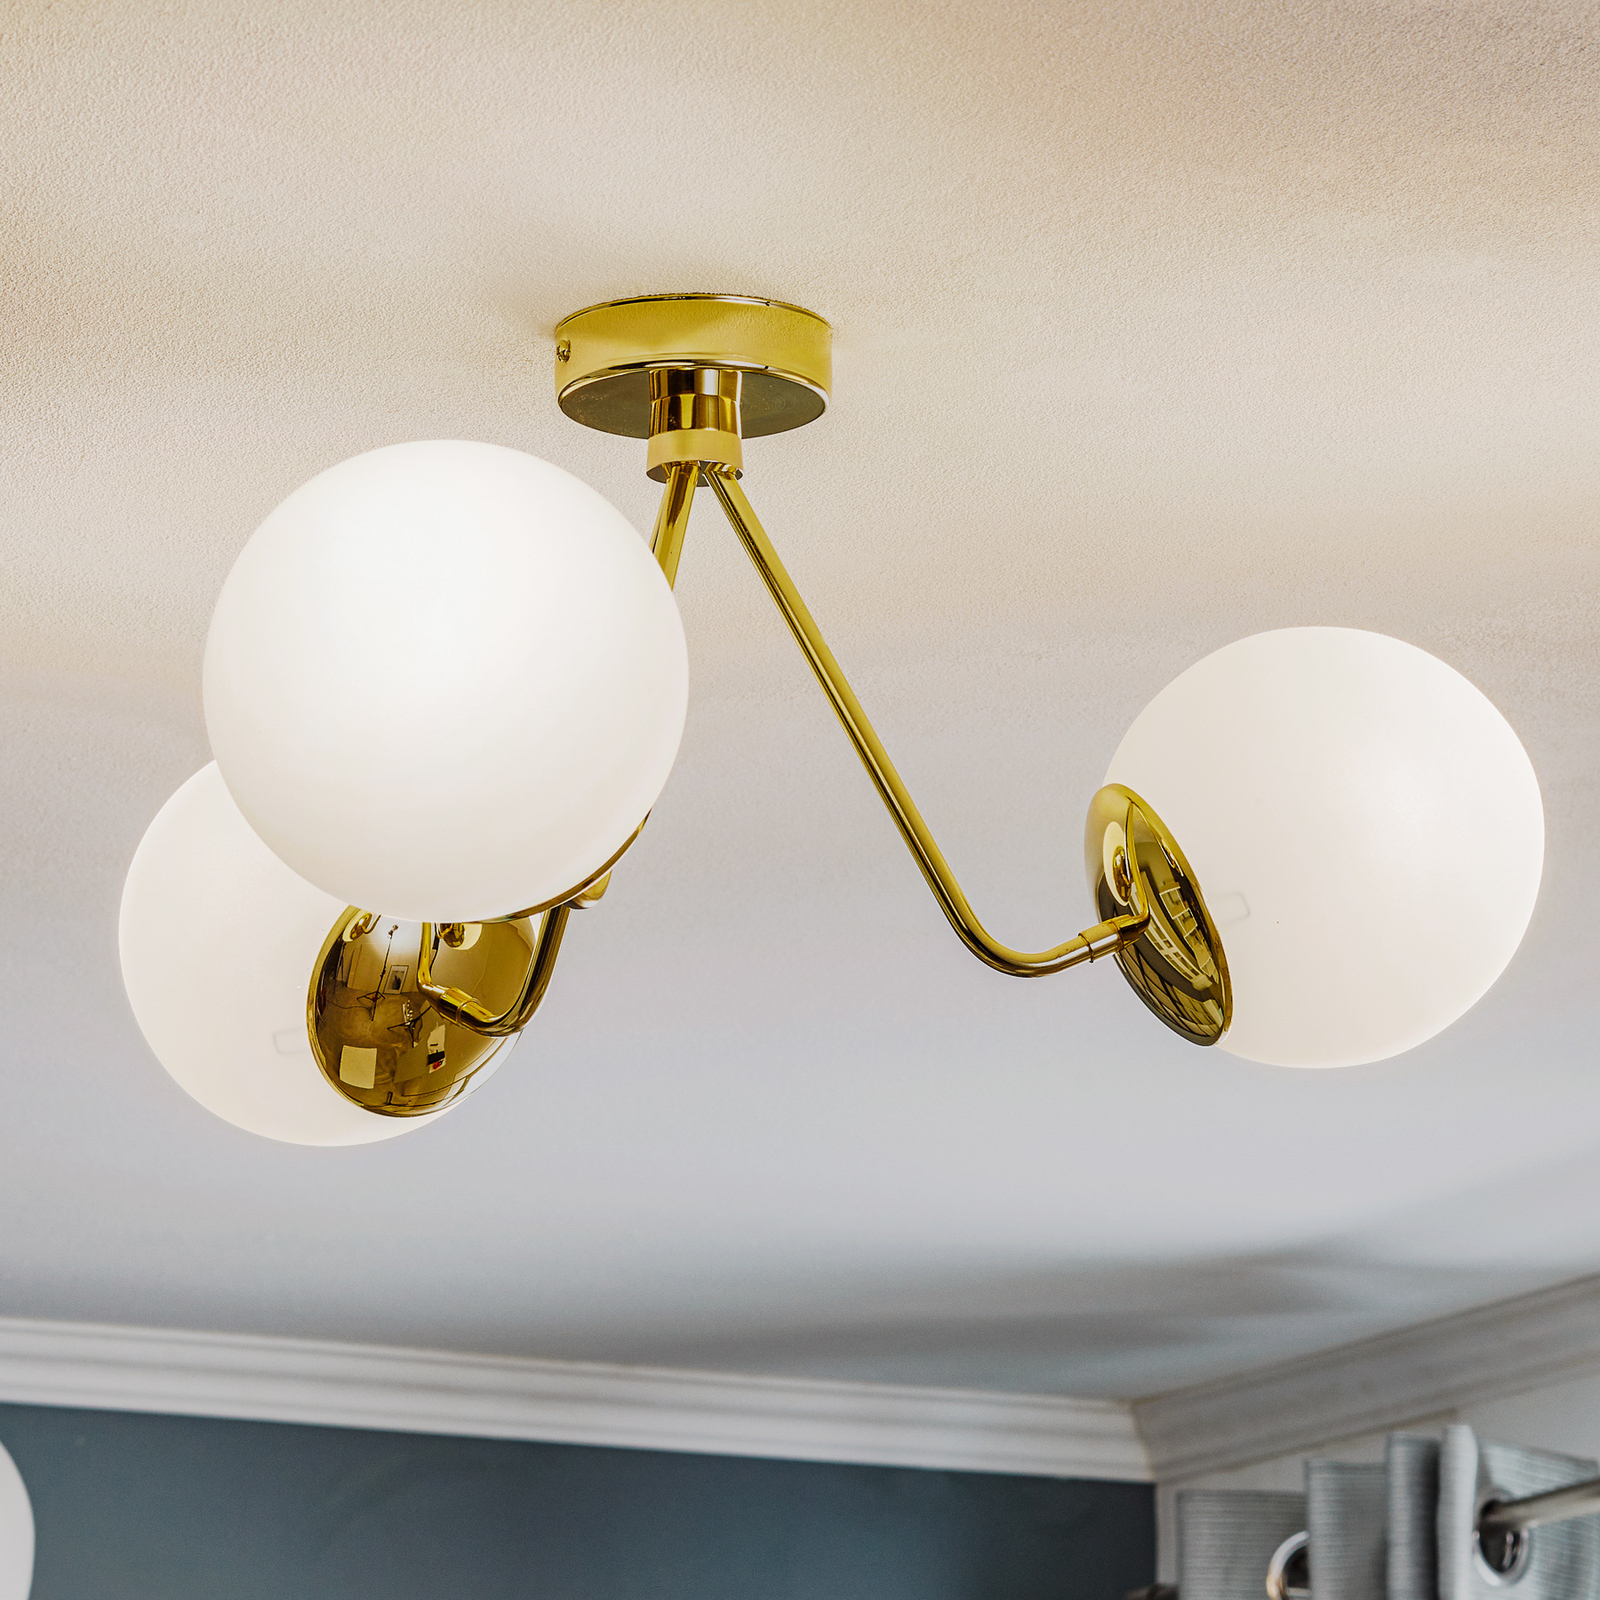 Tuse ceiling light, three-bulb, brass